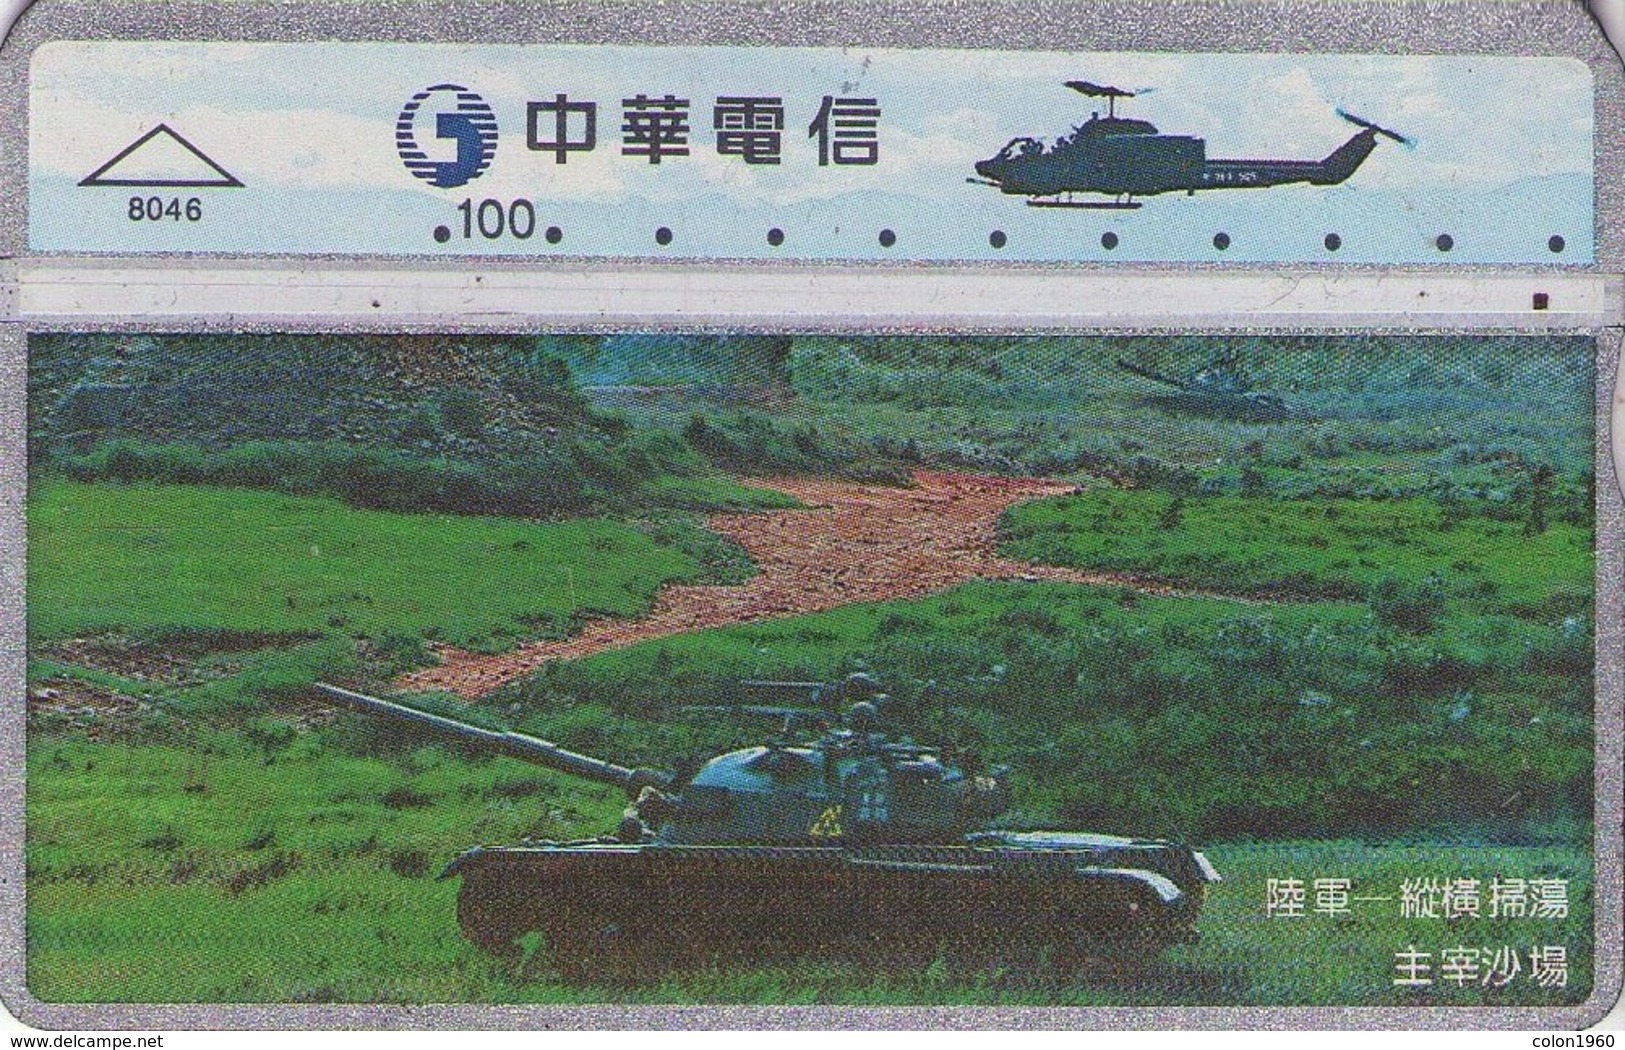 TAIWAN. 840K. ARMY - TANK. 8046. (119) - Armee